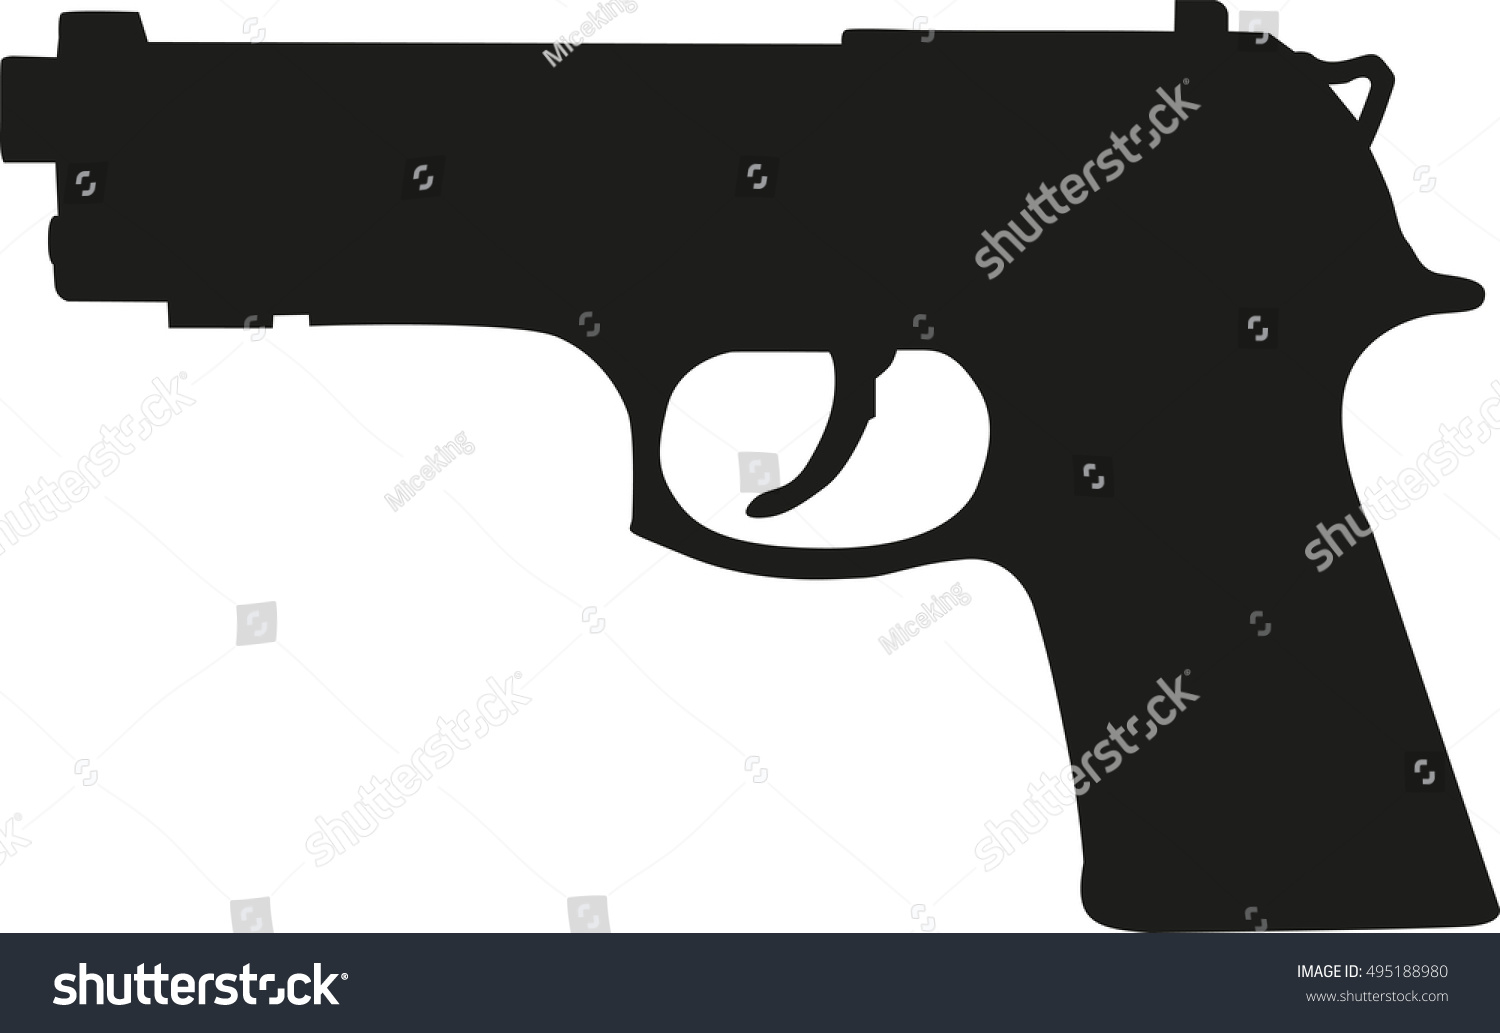 Gun Pistol Silhouette Stock Vector Royalty Free 495188980